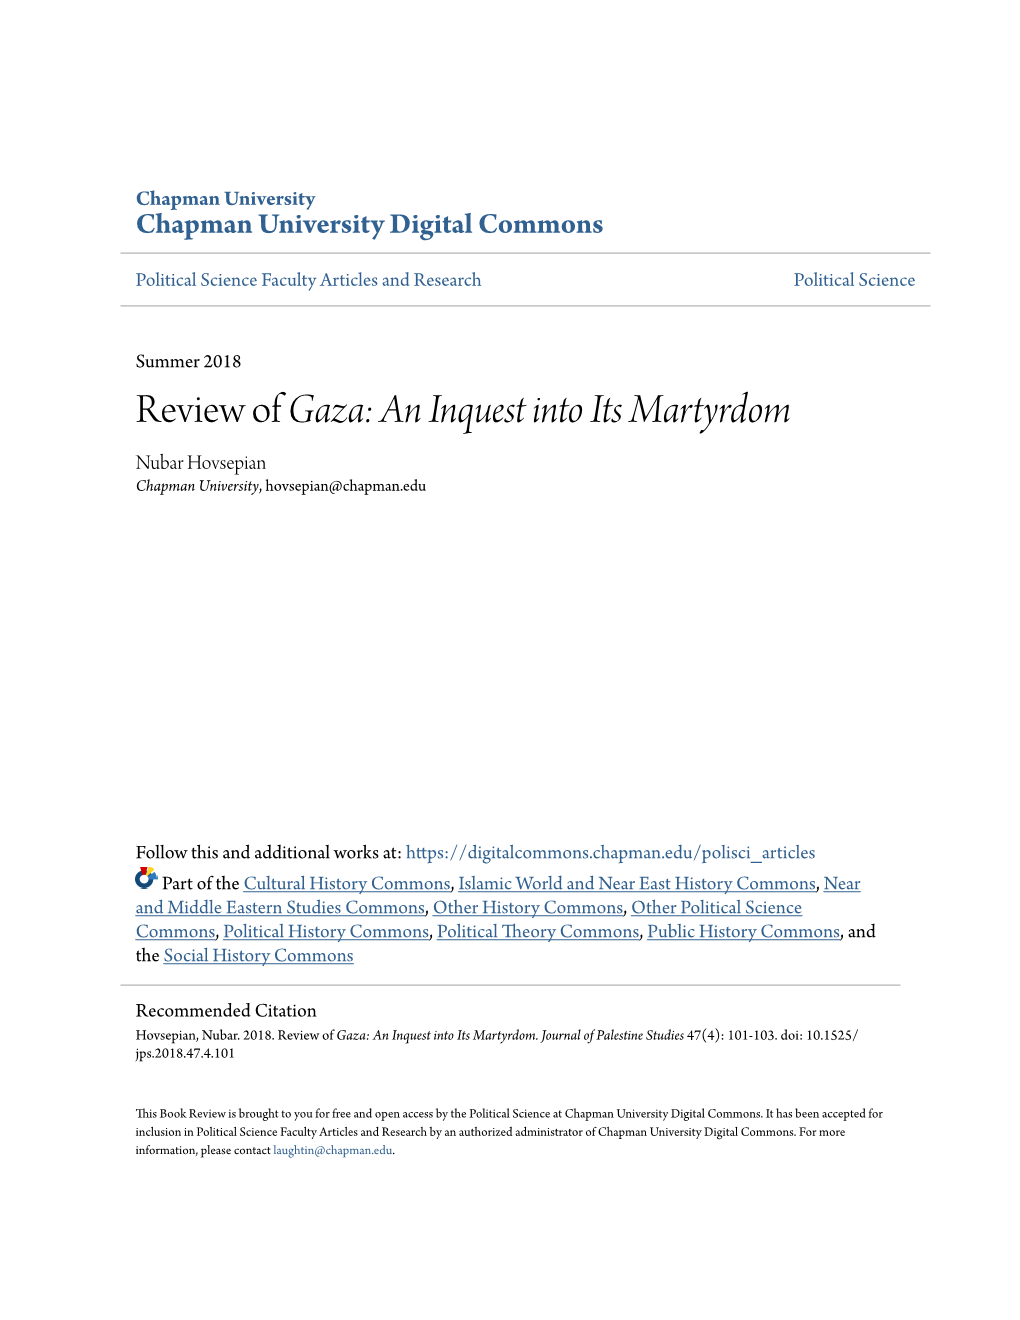 Review of &lt;Em&gt;Gaza: an Inquest Into Its Martyrdom&lt;/Em&gt;